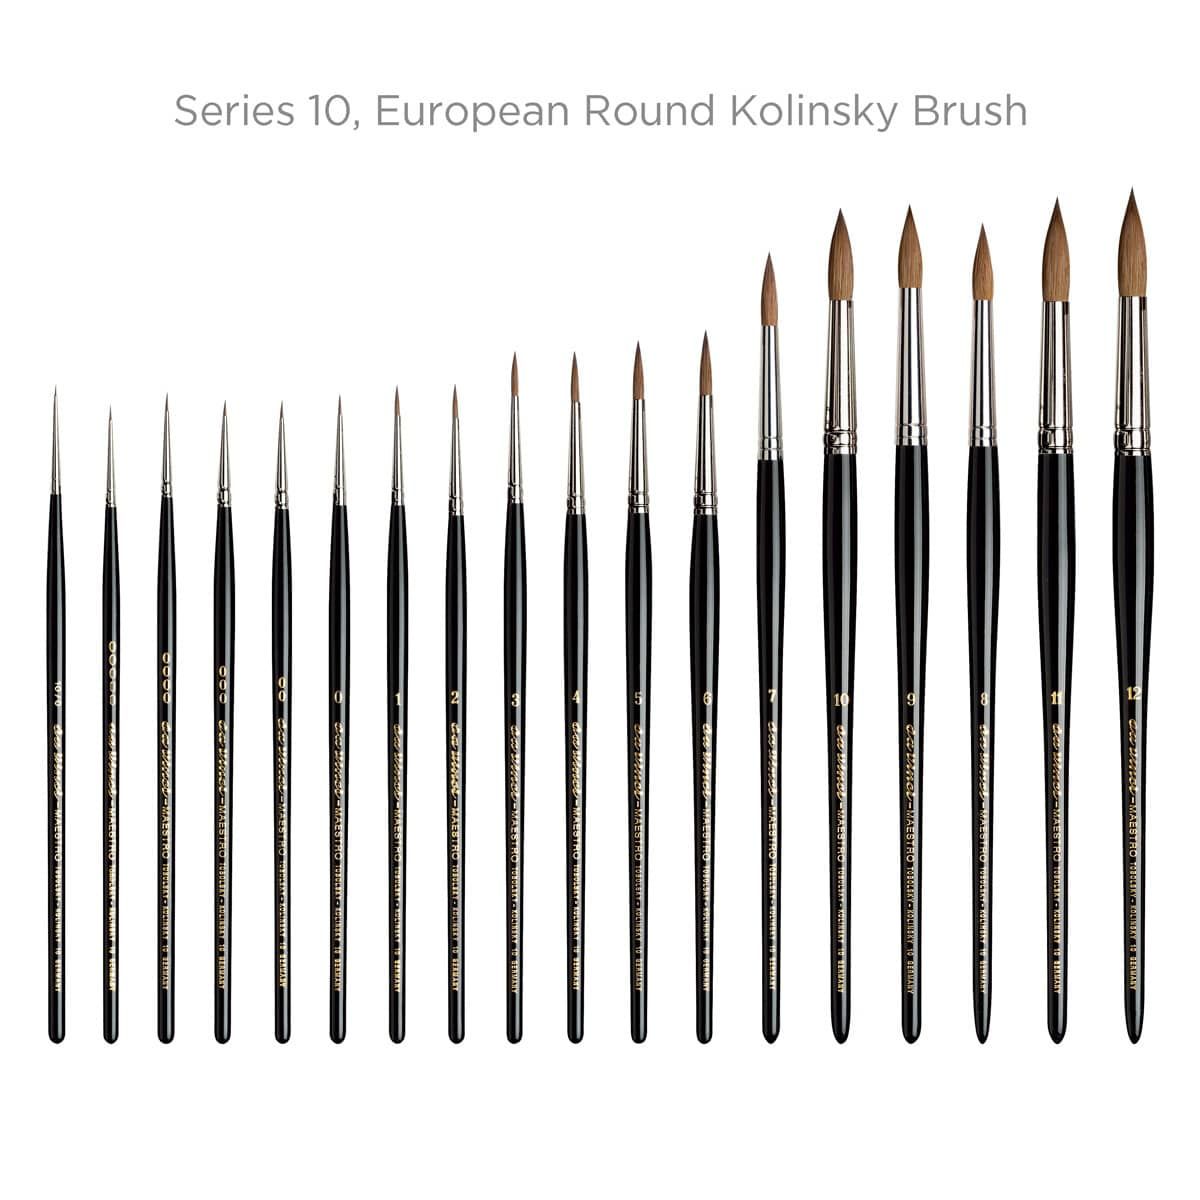 Series 10 European Round Kolinsky Brush